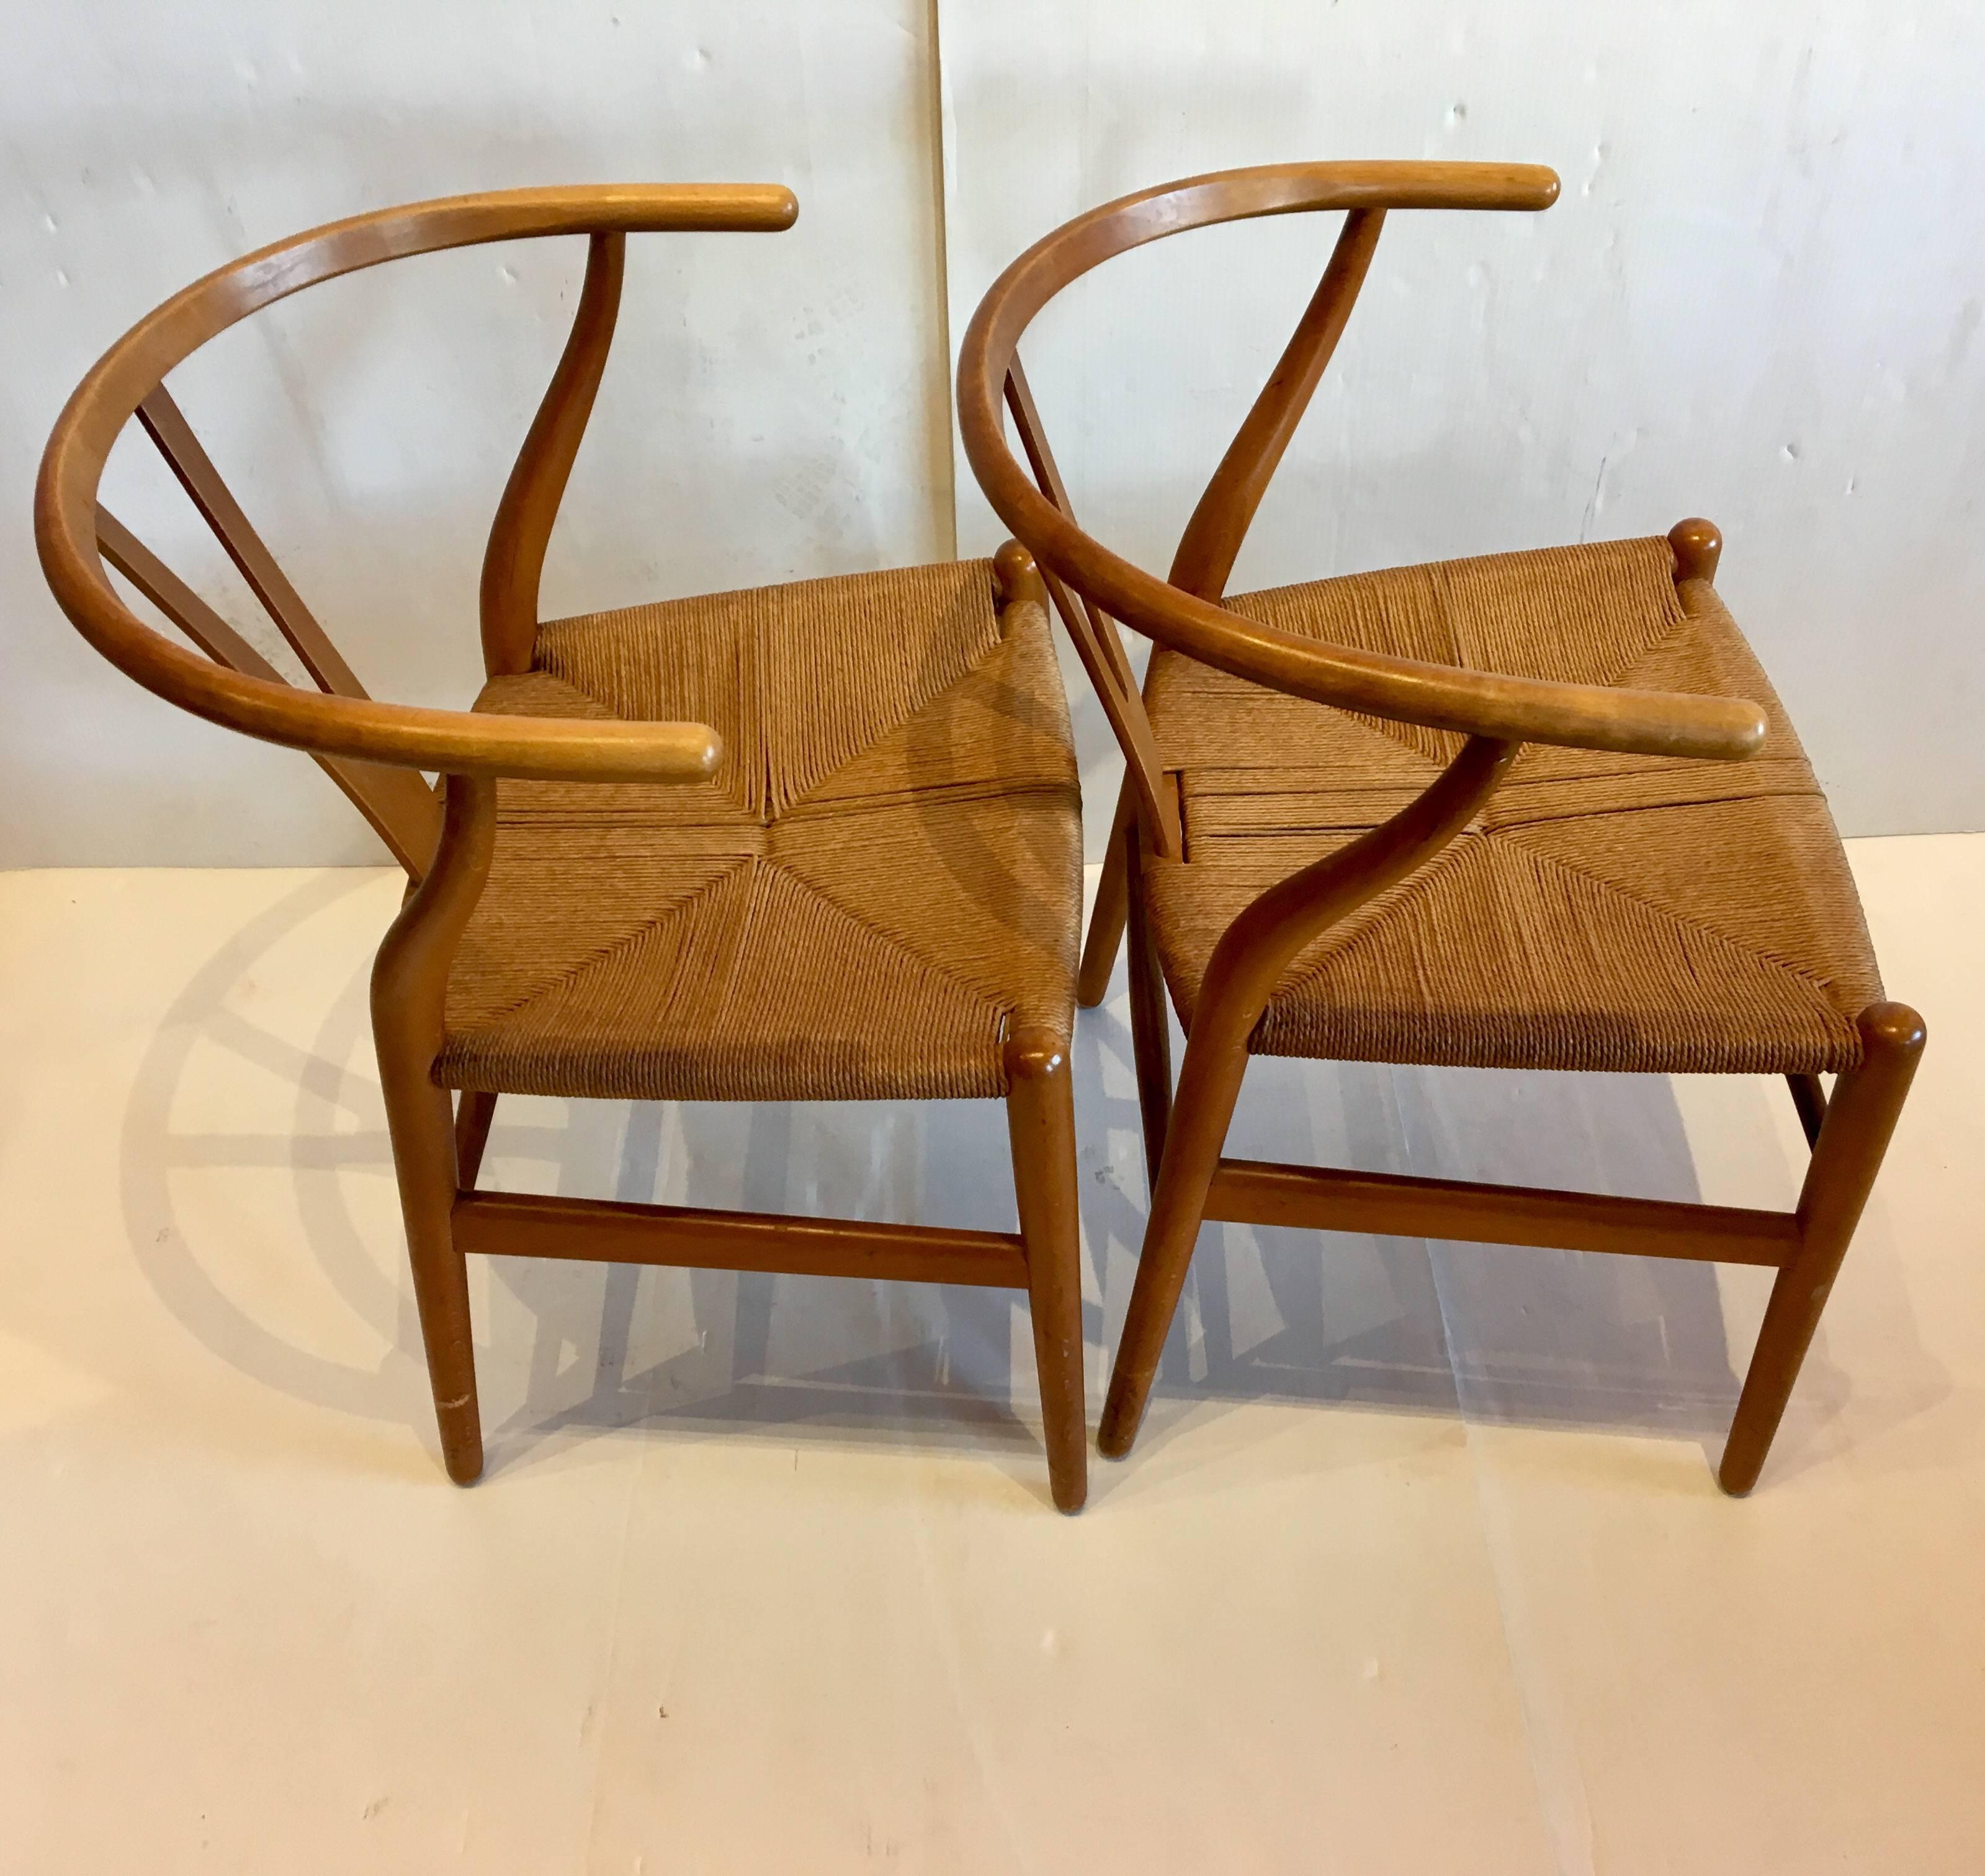 Scandinavian Modern Pair of Danish Modern Hans Wegner Wishbone Chairs by Carl Hansen & Son